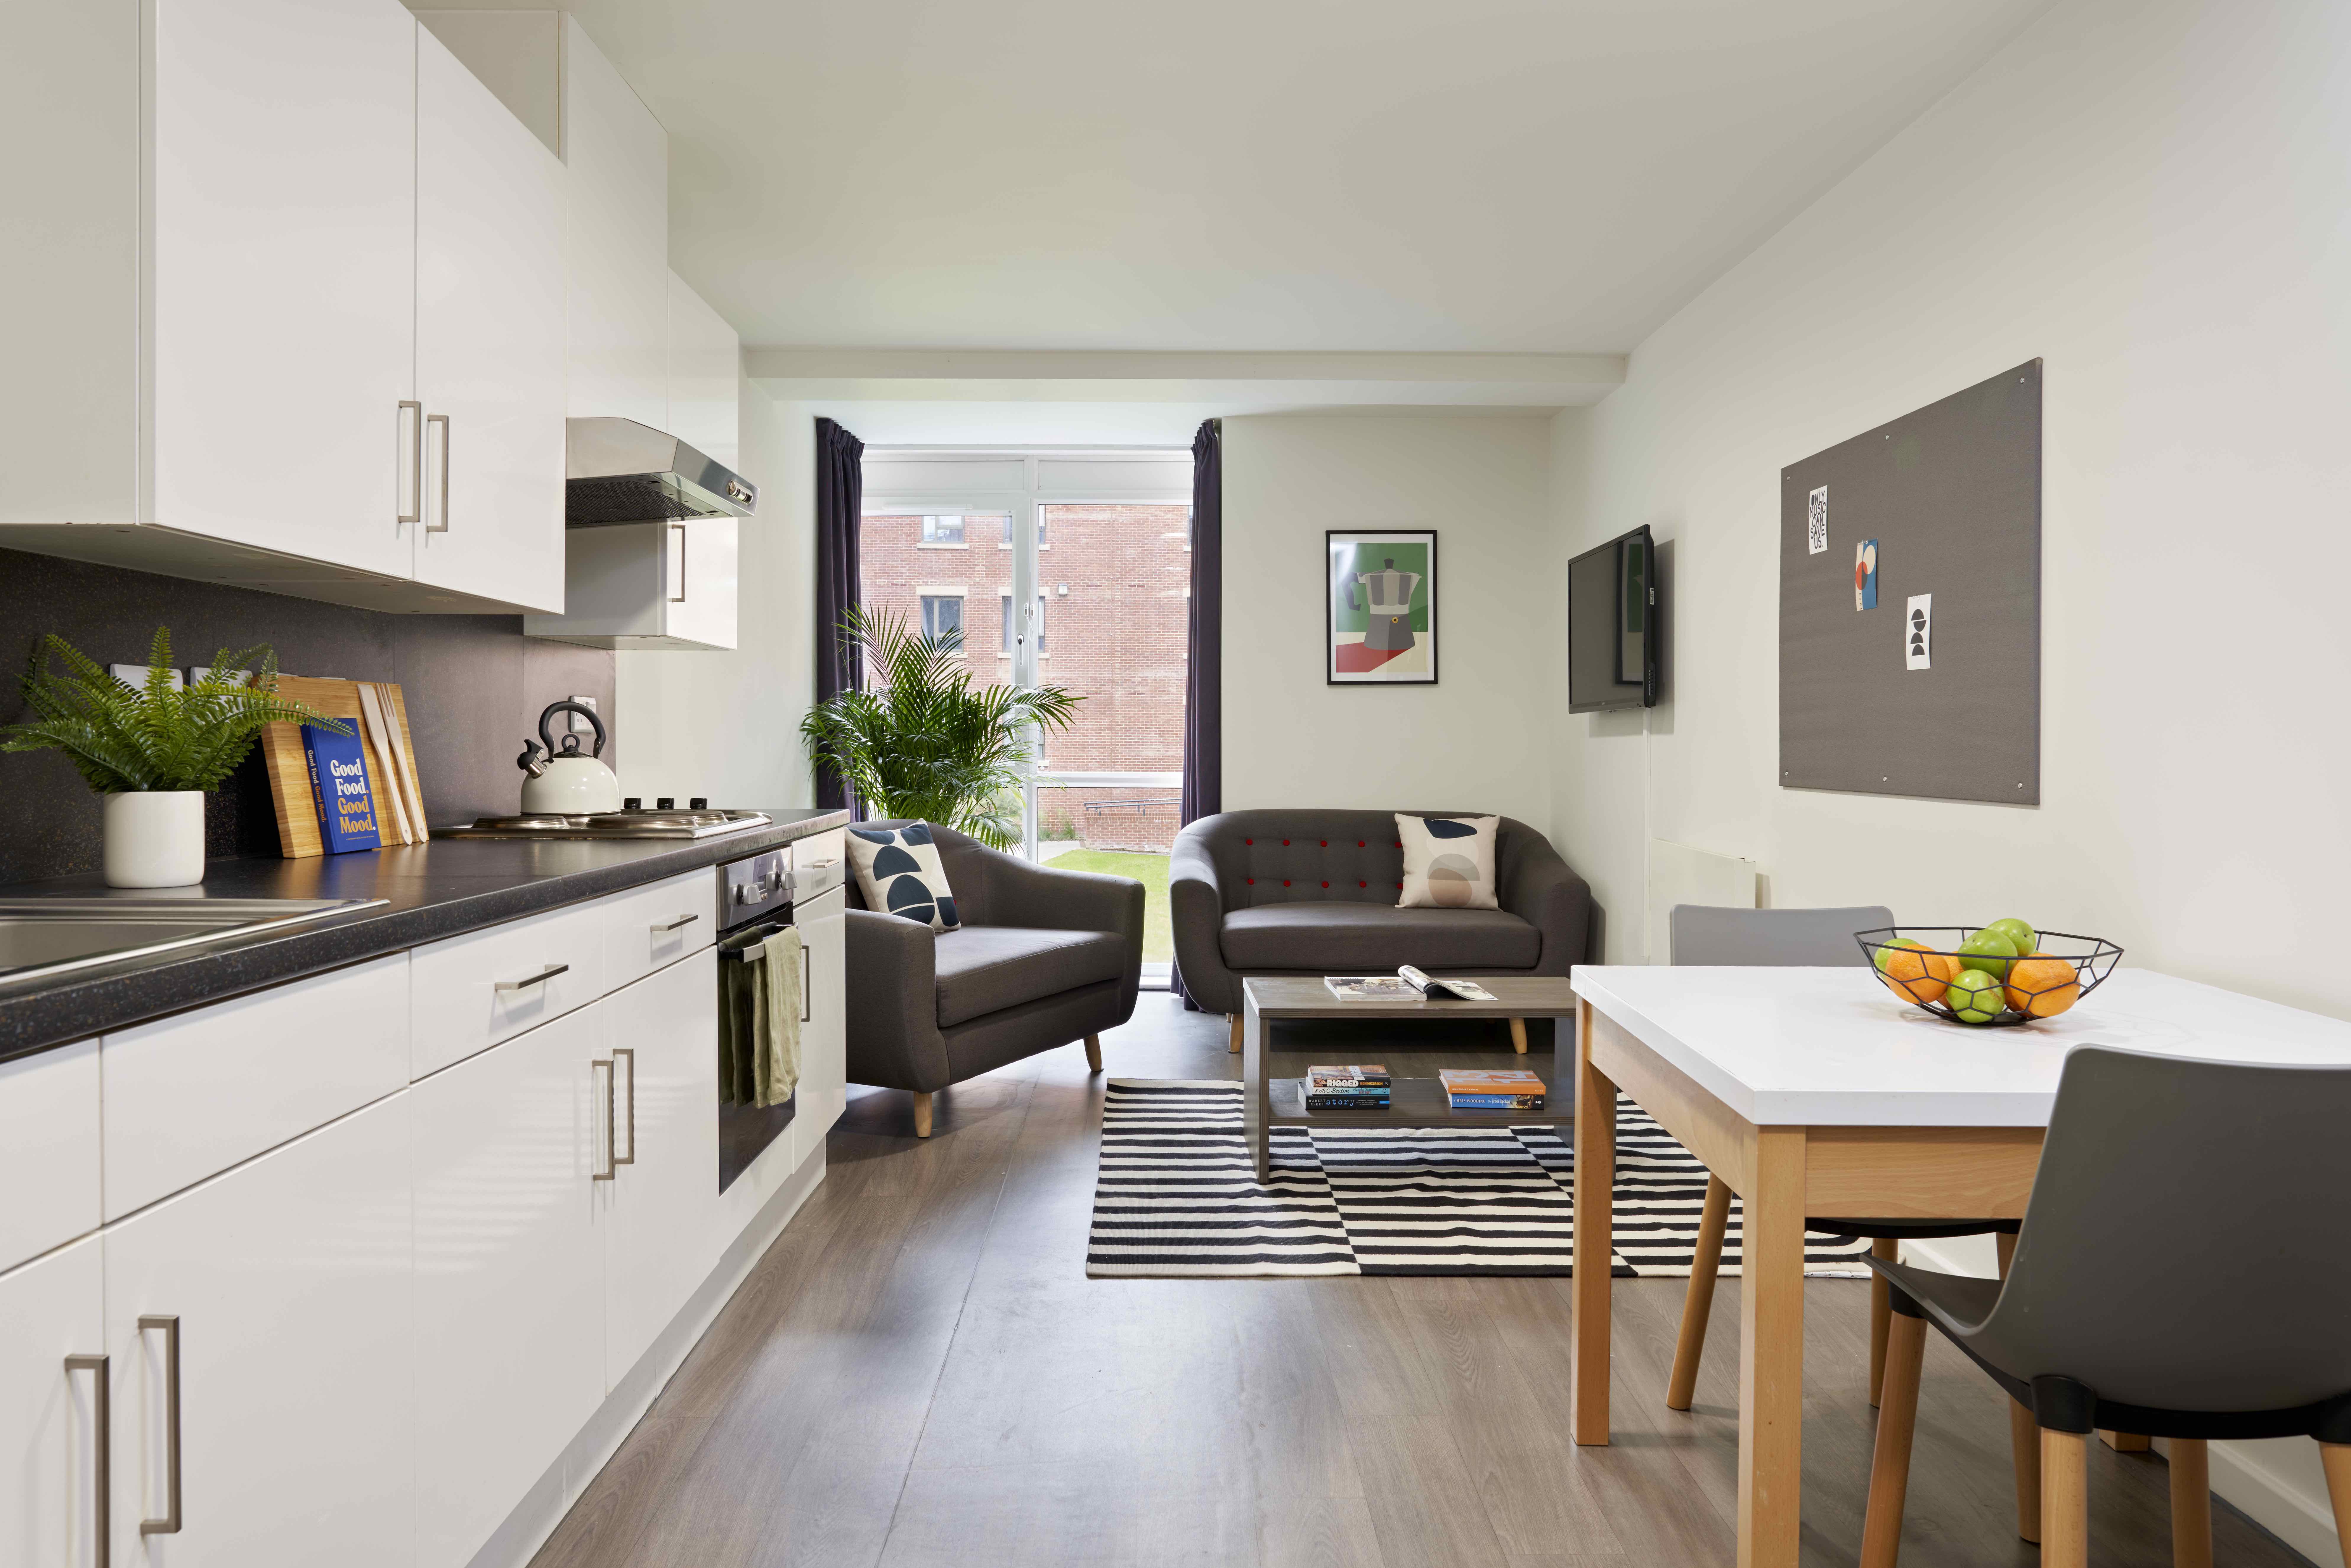 Leeds student accommodation shared flat kitchen